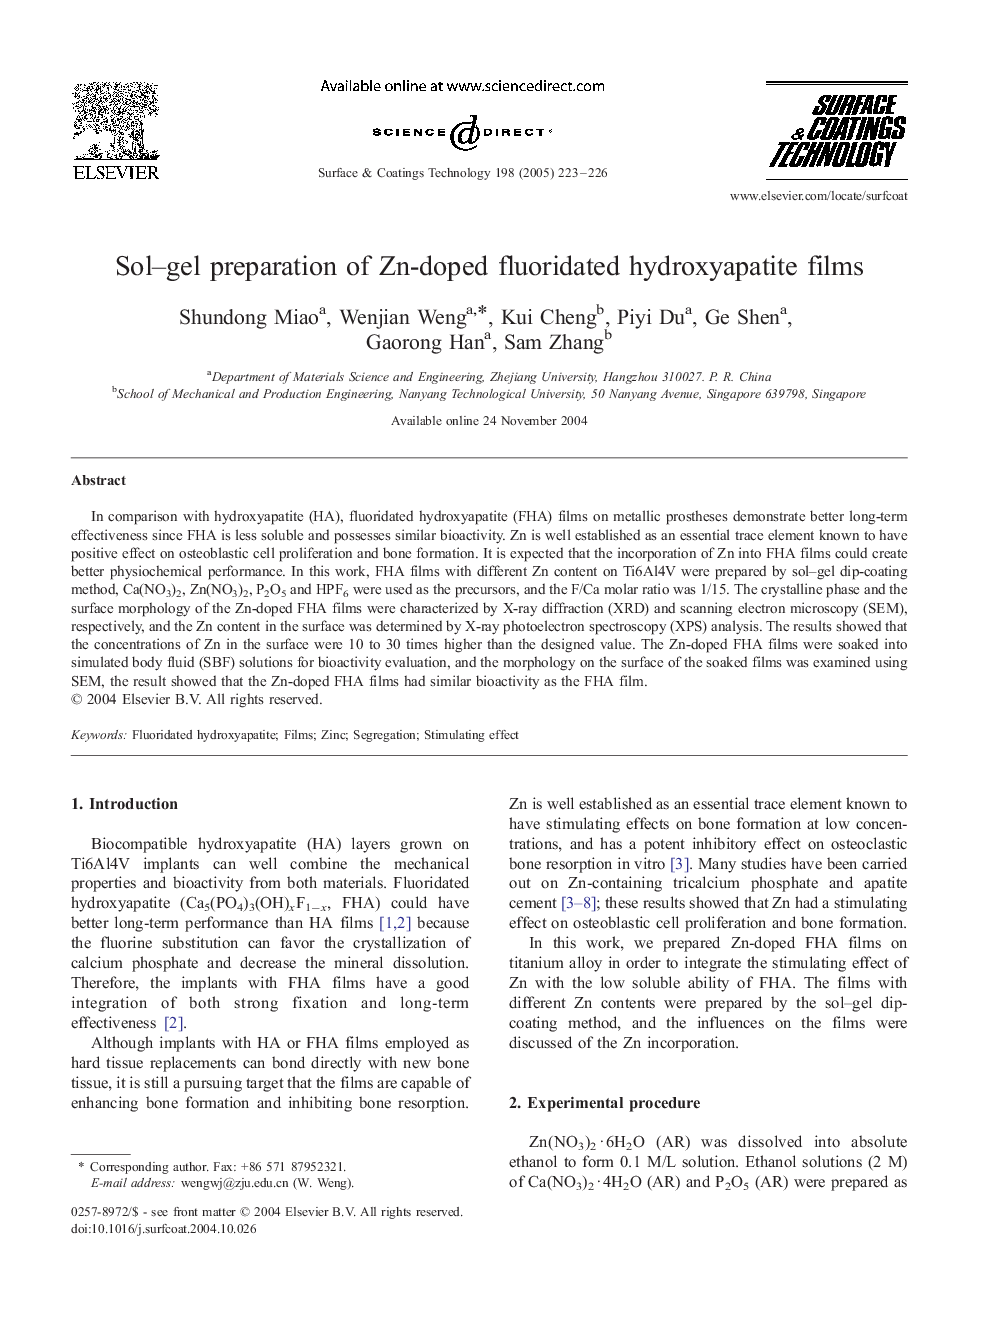 Sol-gel preparation of Zn-doped fluoridated hydroxyapatite films